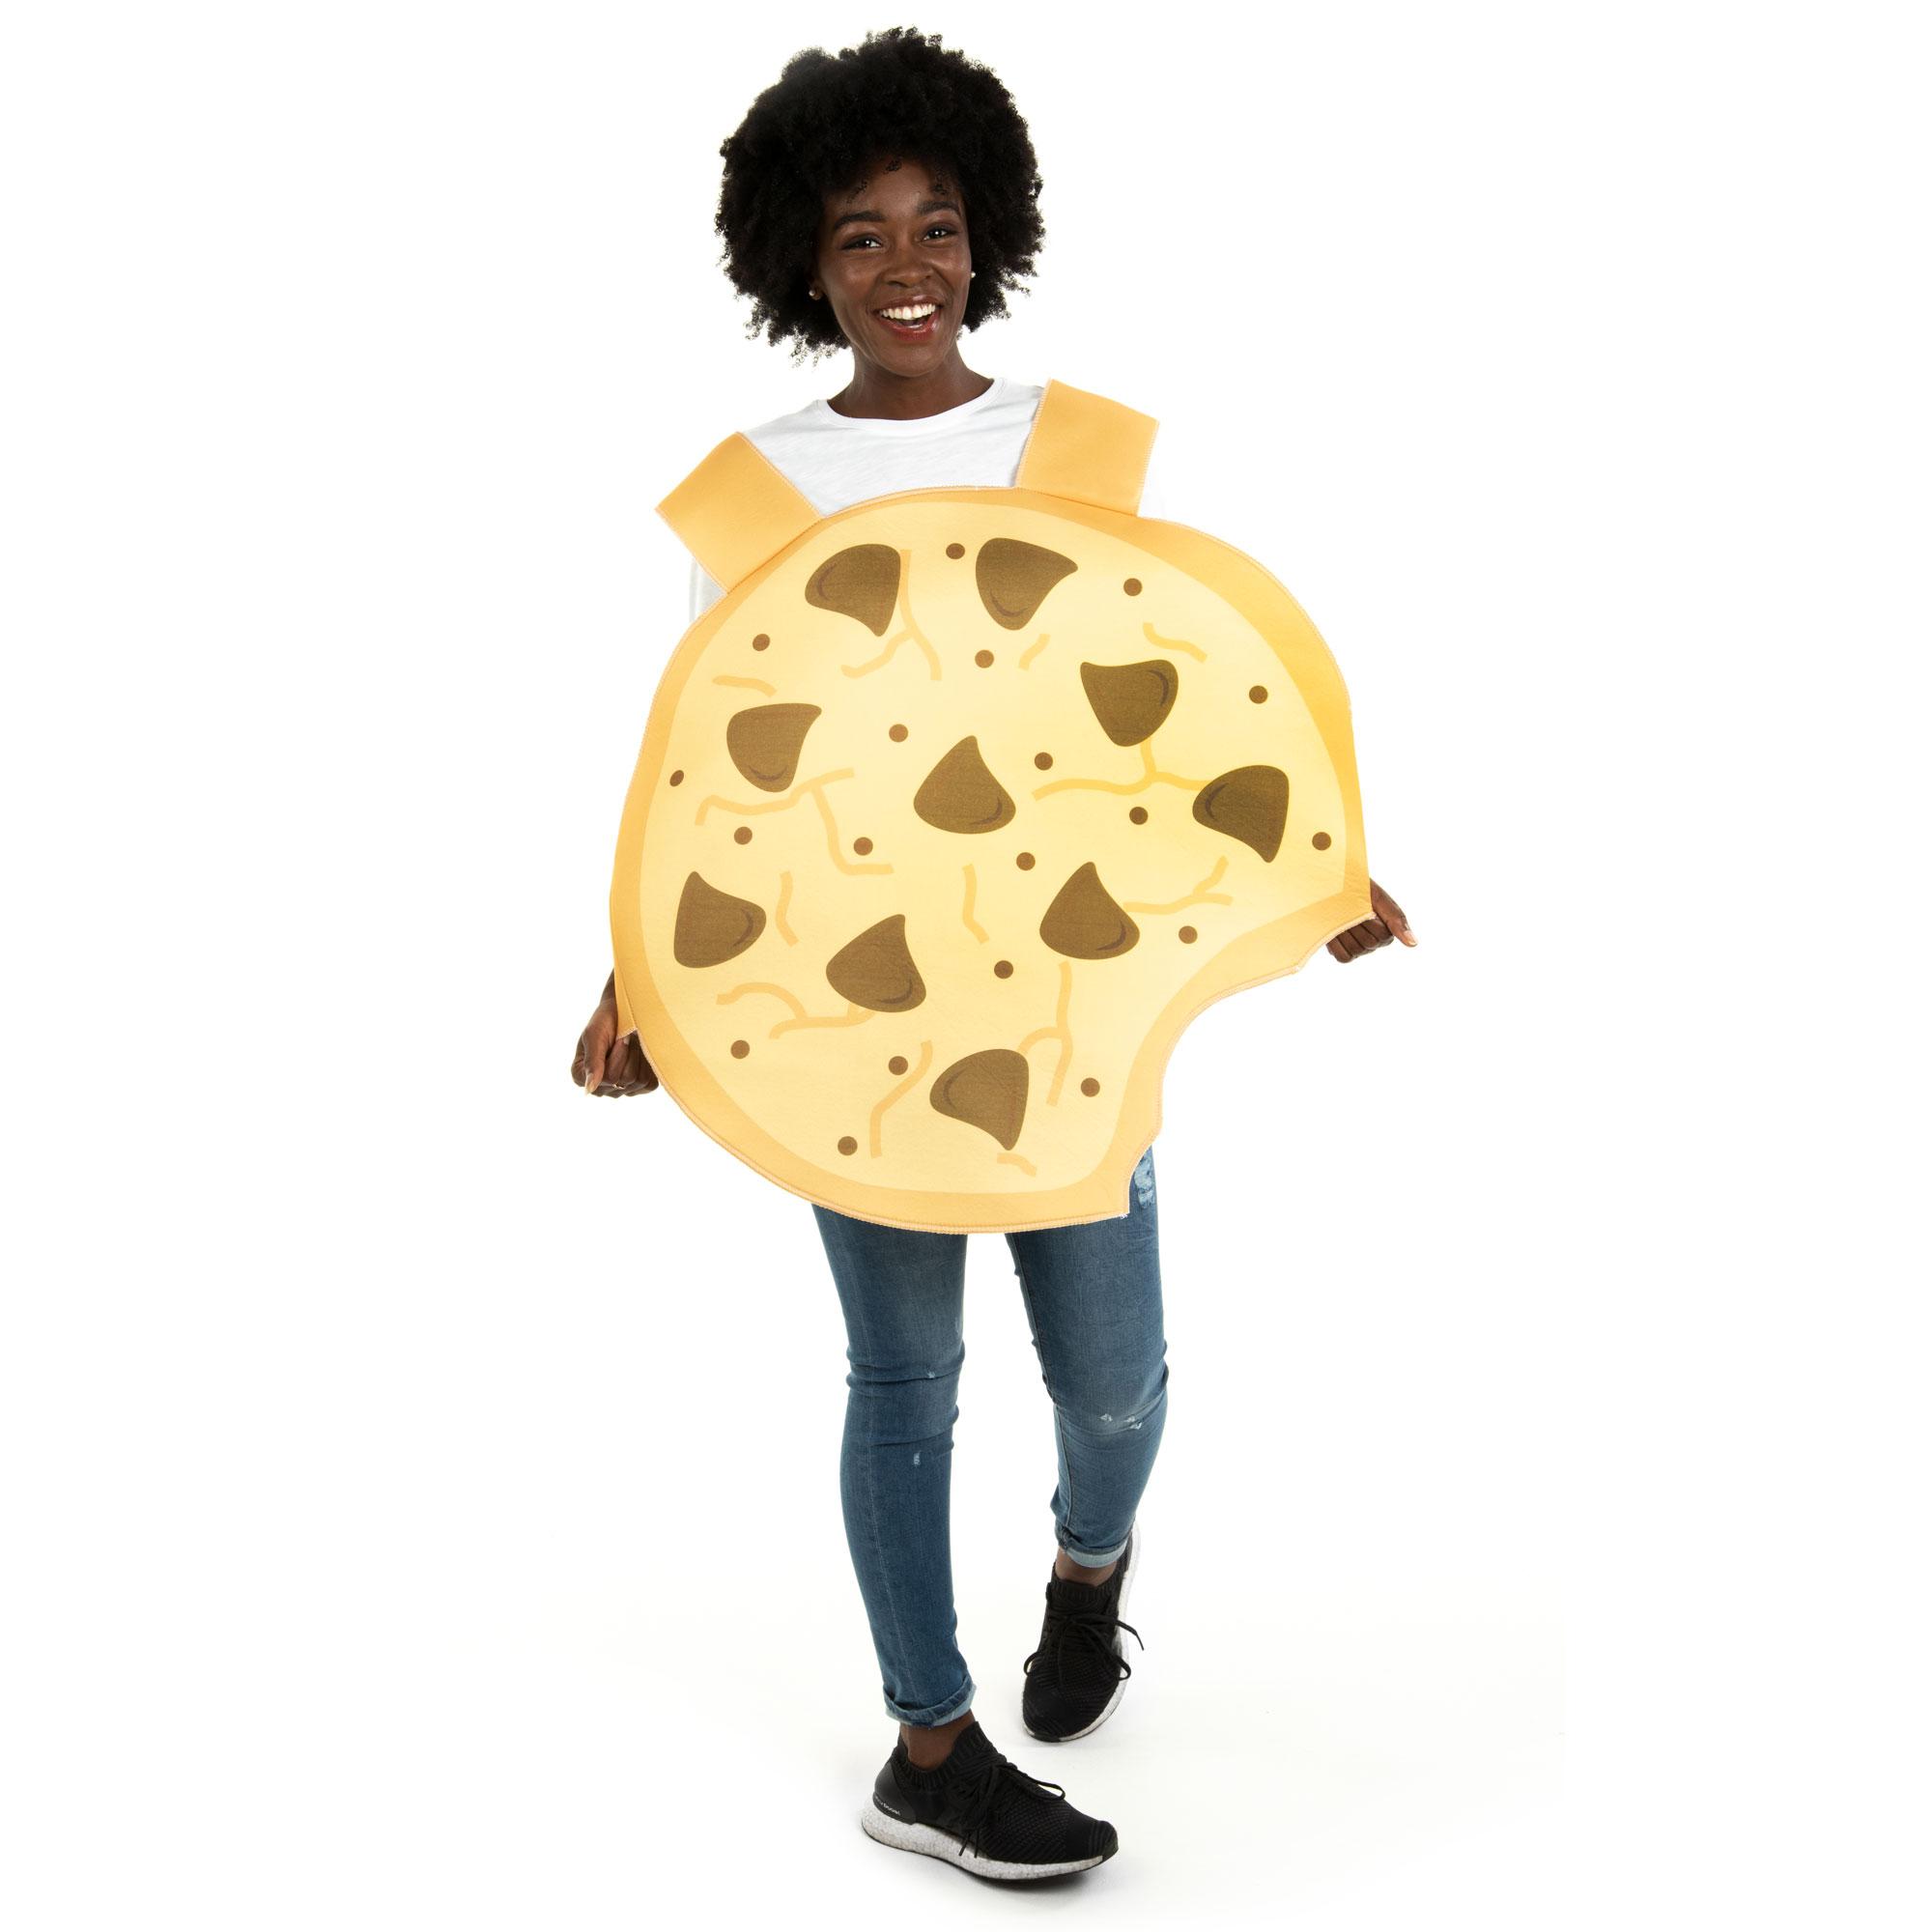 Choco Chip Cookie Costume